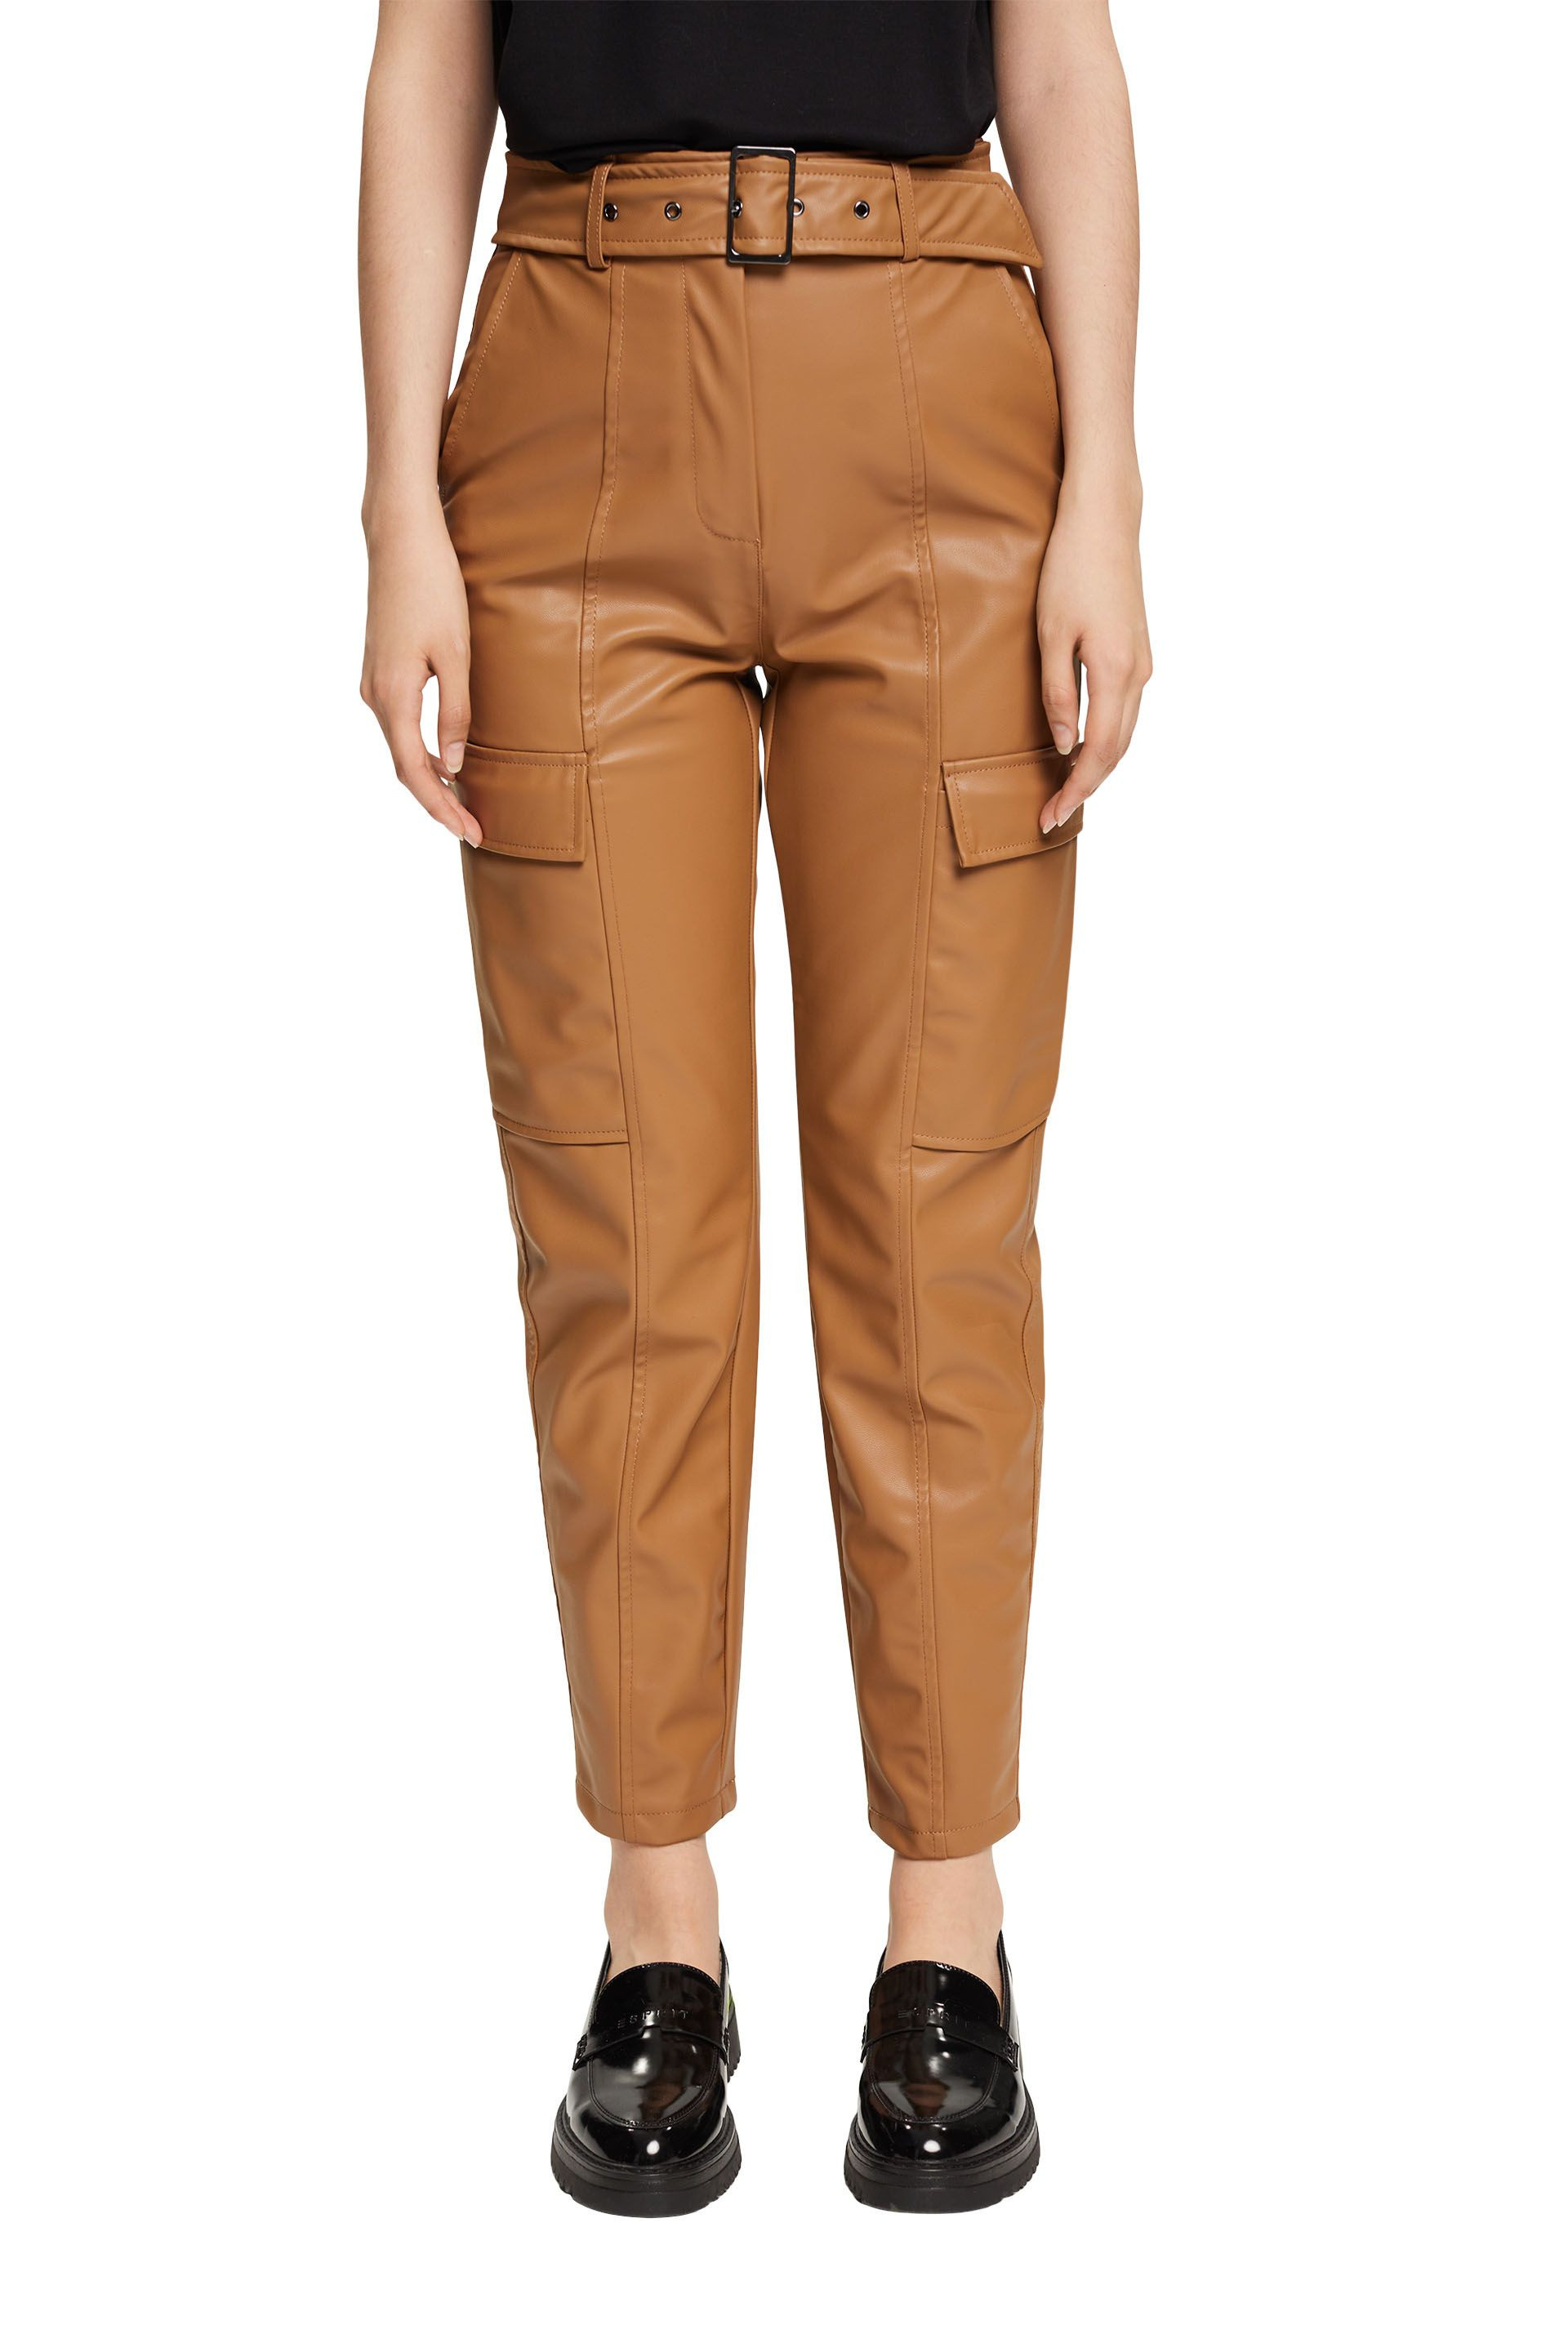 Pantaloni in similpelle con cintura, Marrone chiaro, large image number 1